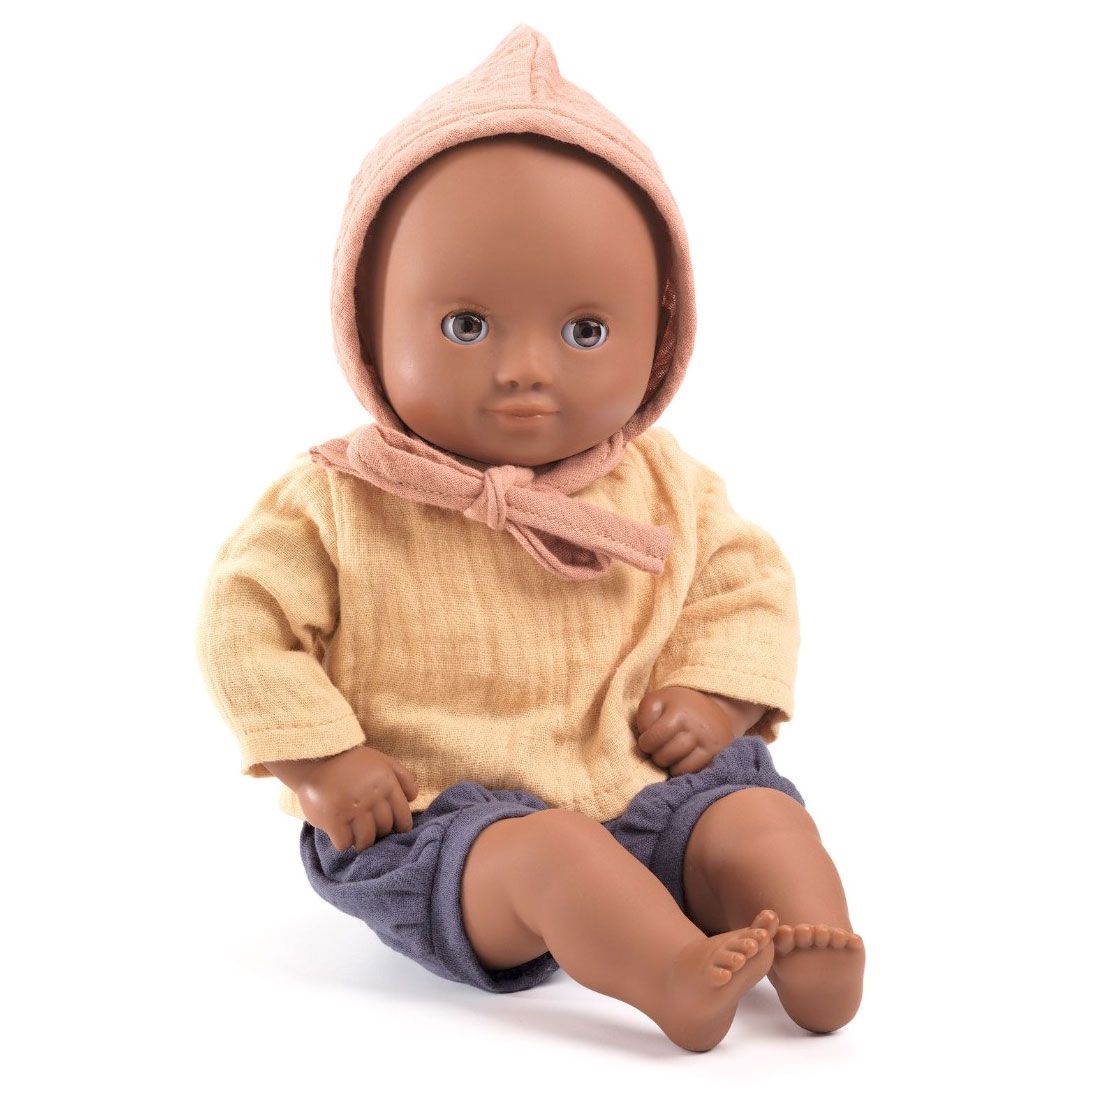 Babydukke med brune øjne og hudfarve fra Djeco. Dukken har bukser, skjorte og kyse på.